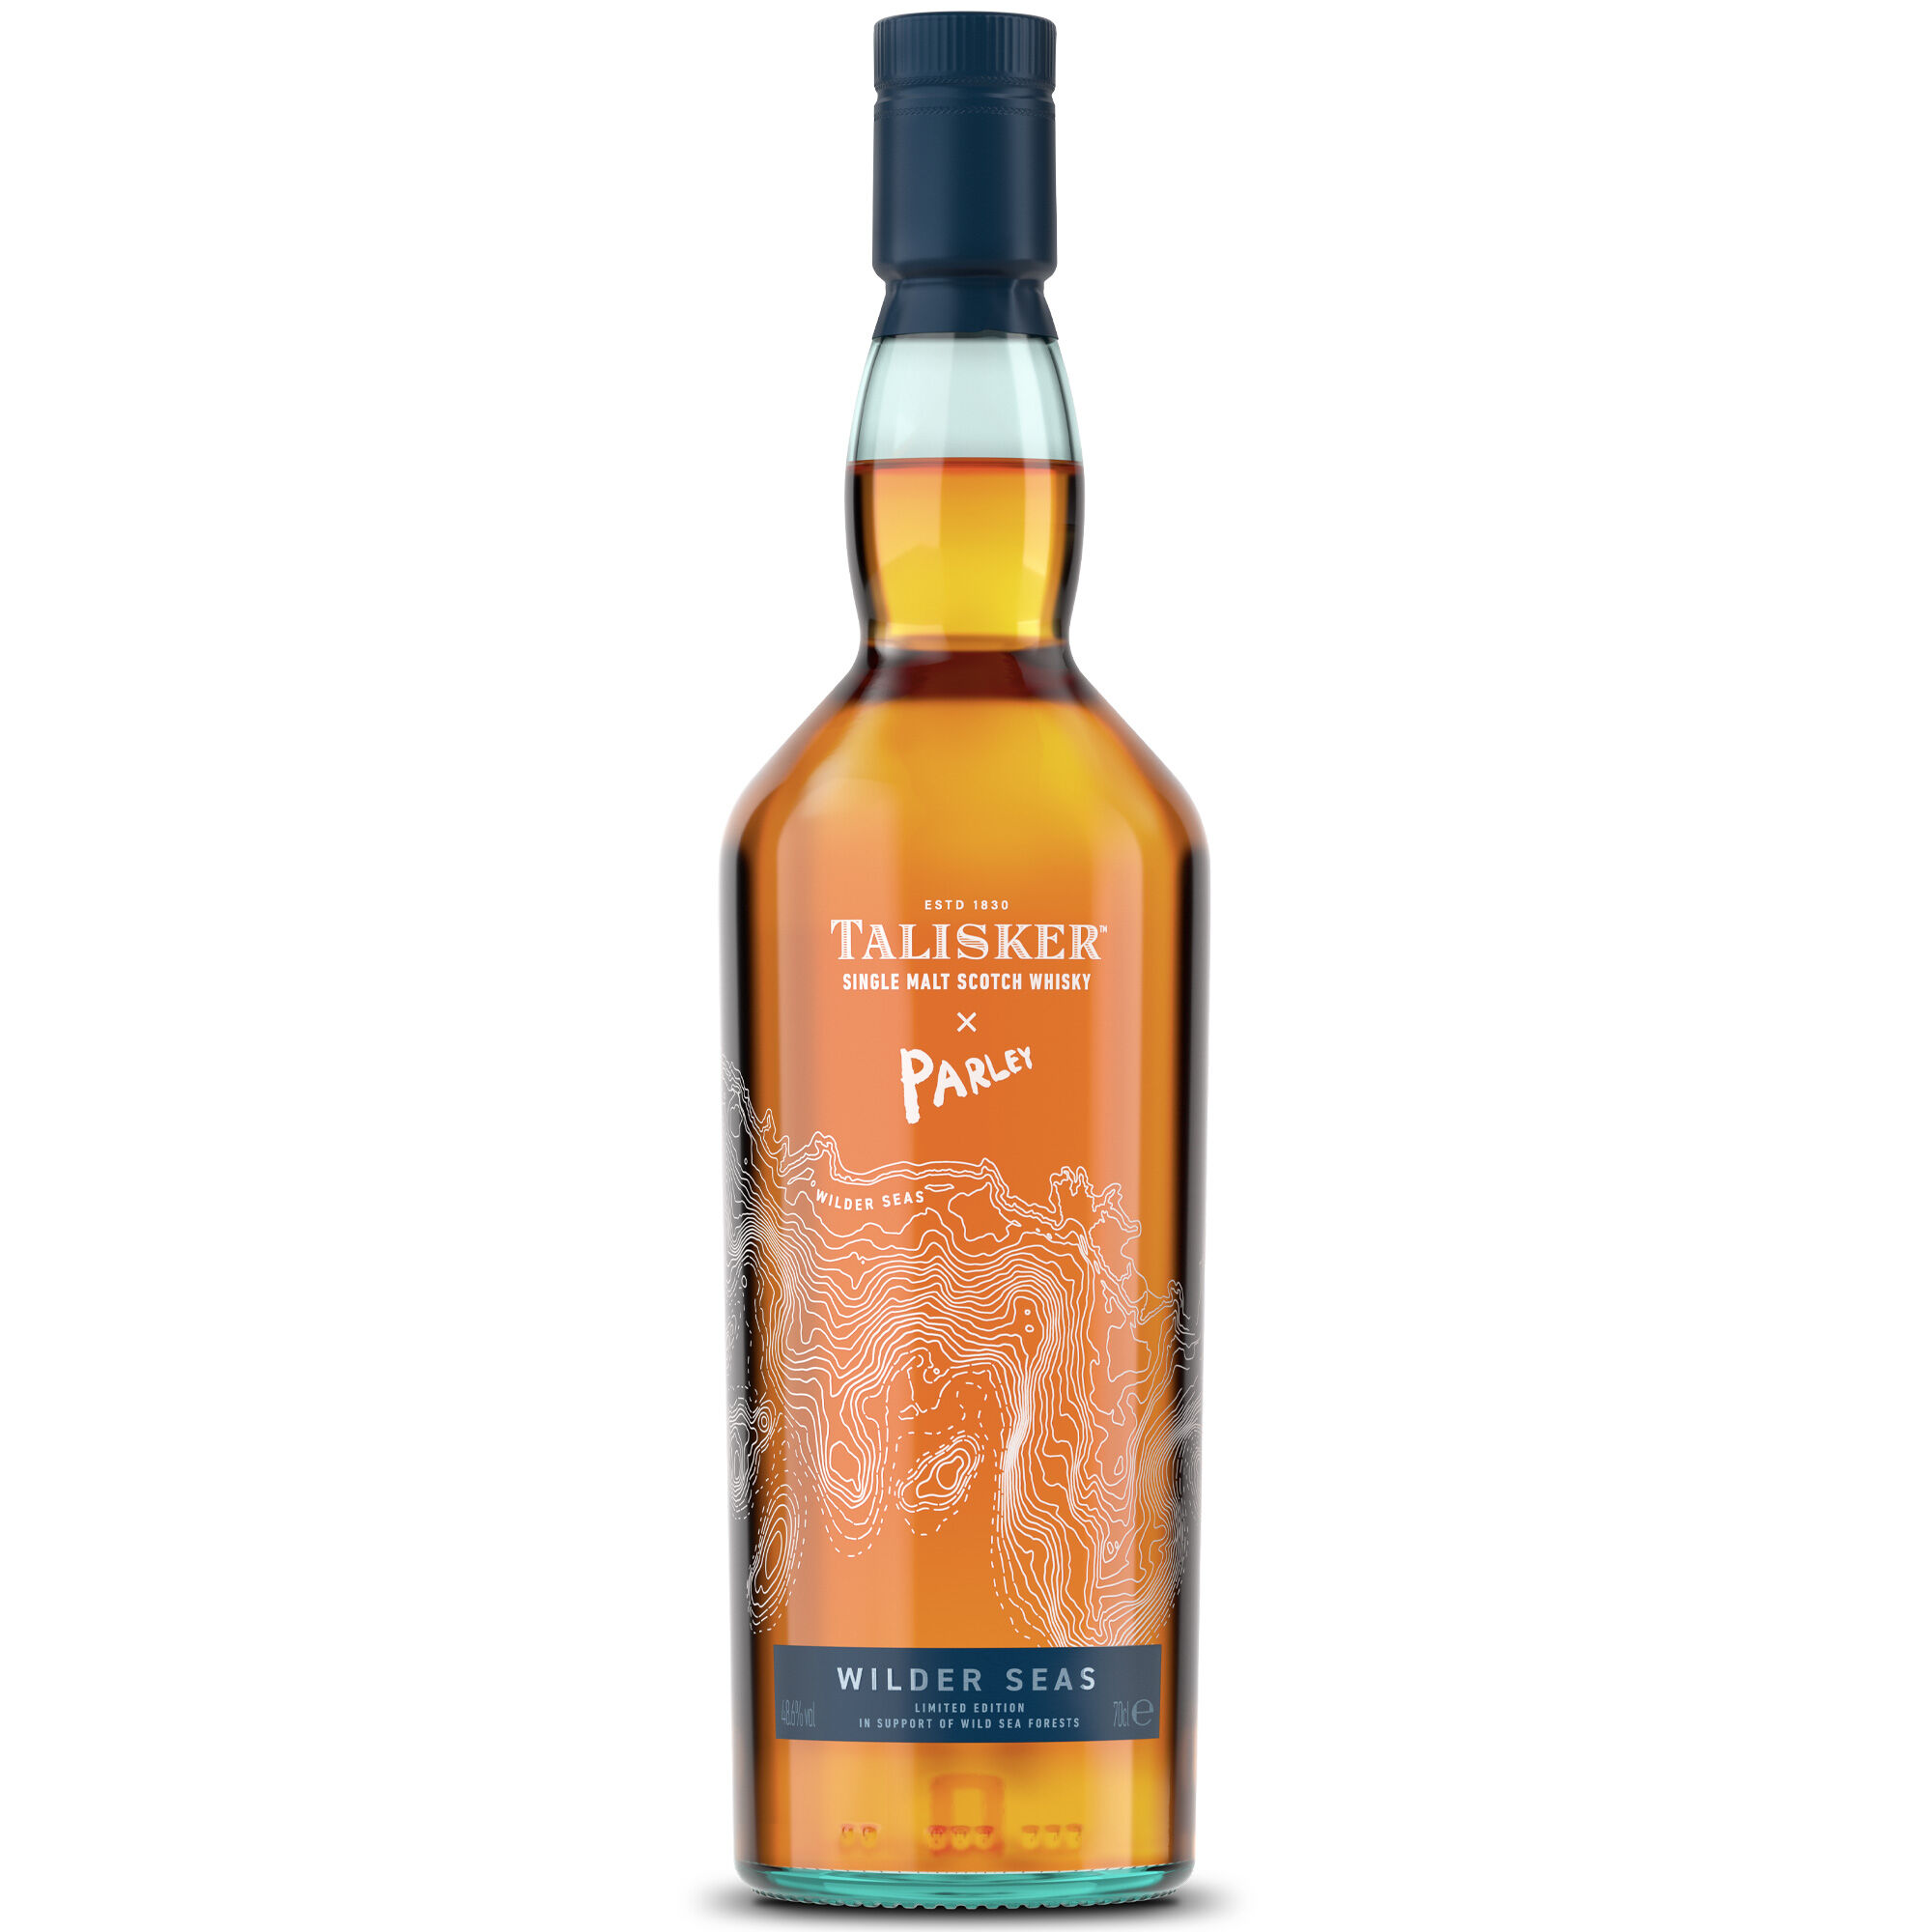 Single Malt Scotch Whisky “talisker X Parley Wilder Seas” Limited Edition